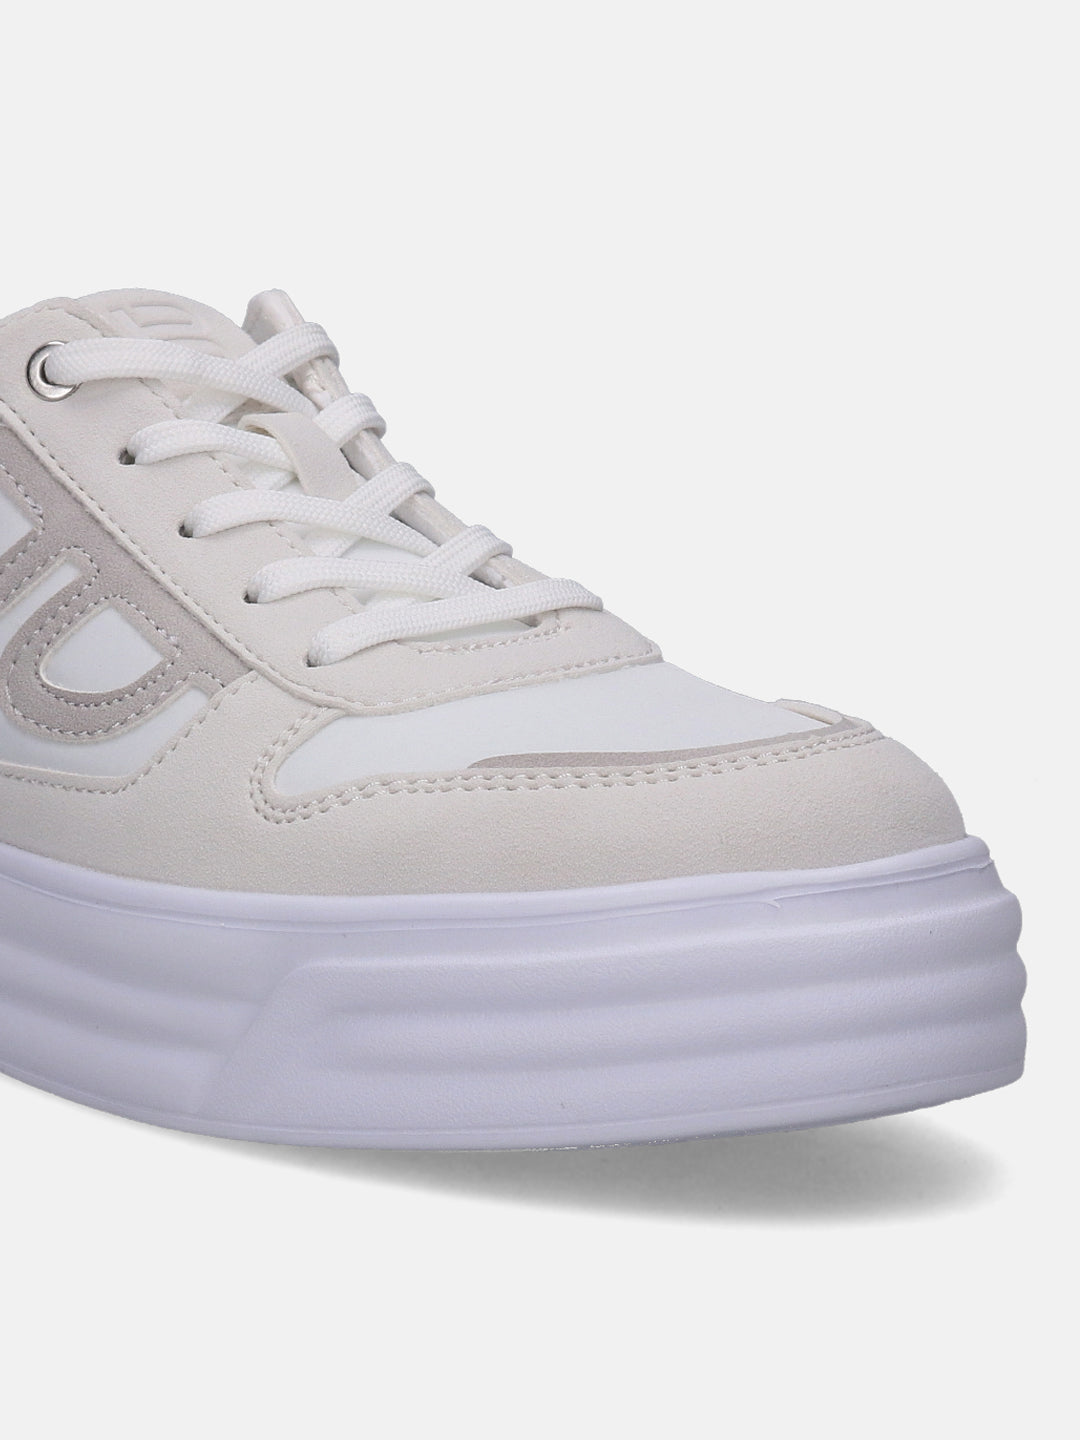 Blu Off White & Grey Sneakers - BAGATT